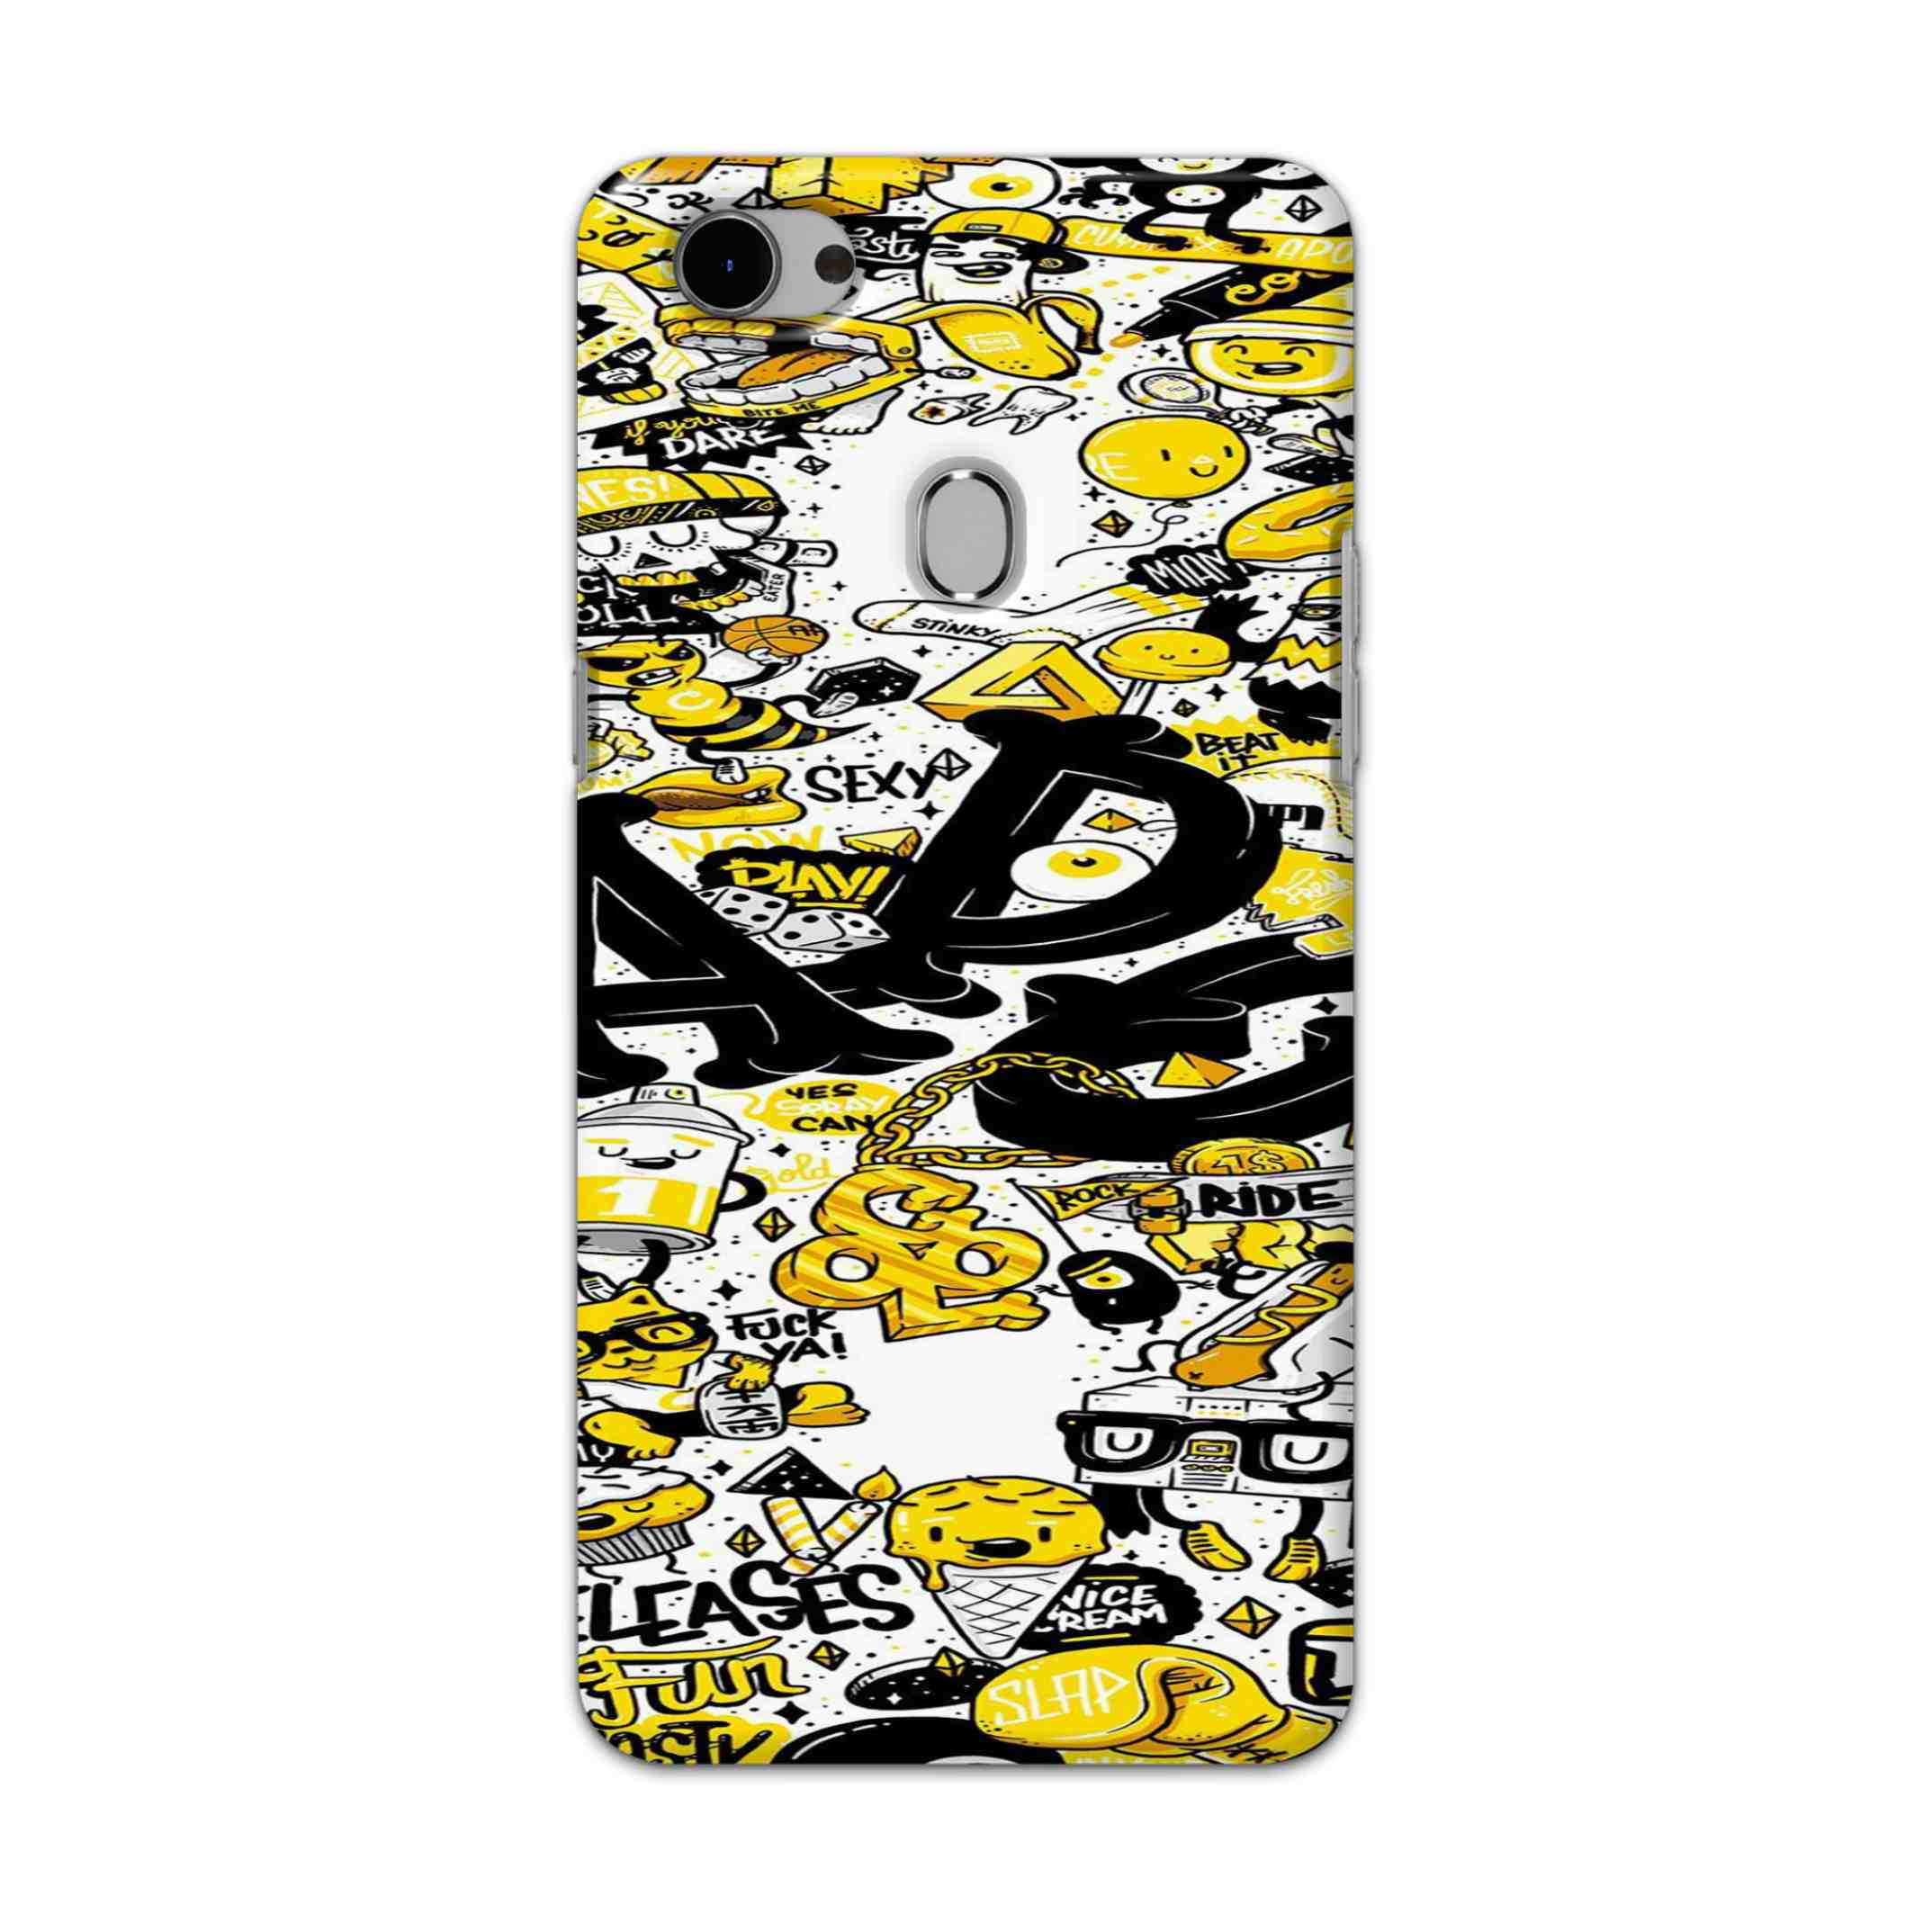 Buy Ado Hard Back Mobile Phone Case Cover For Oppo F7 Online